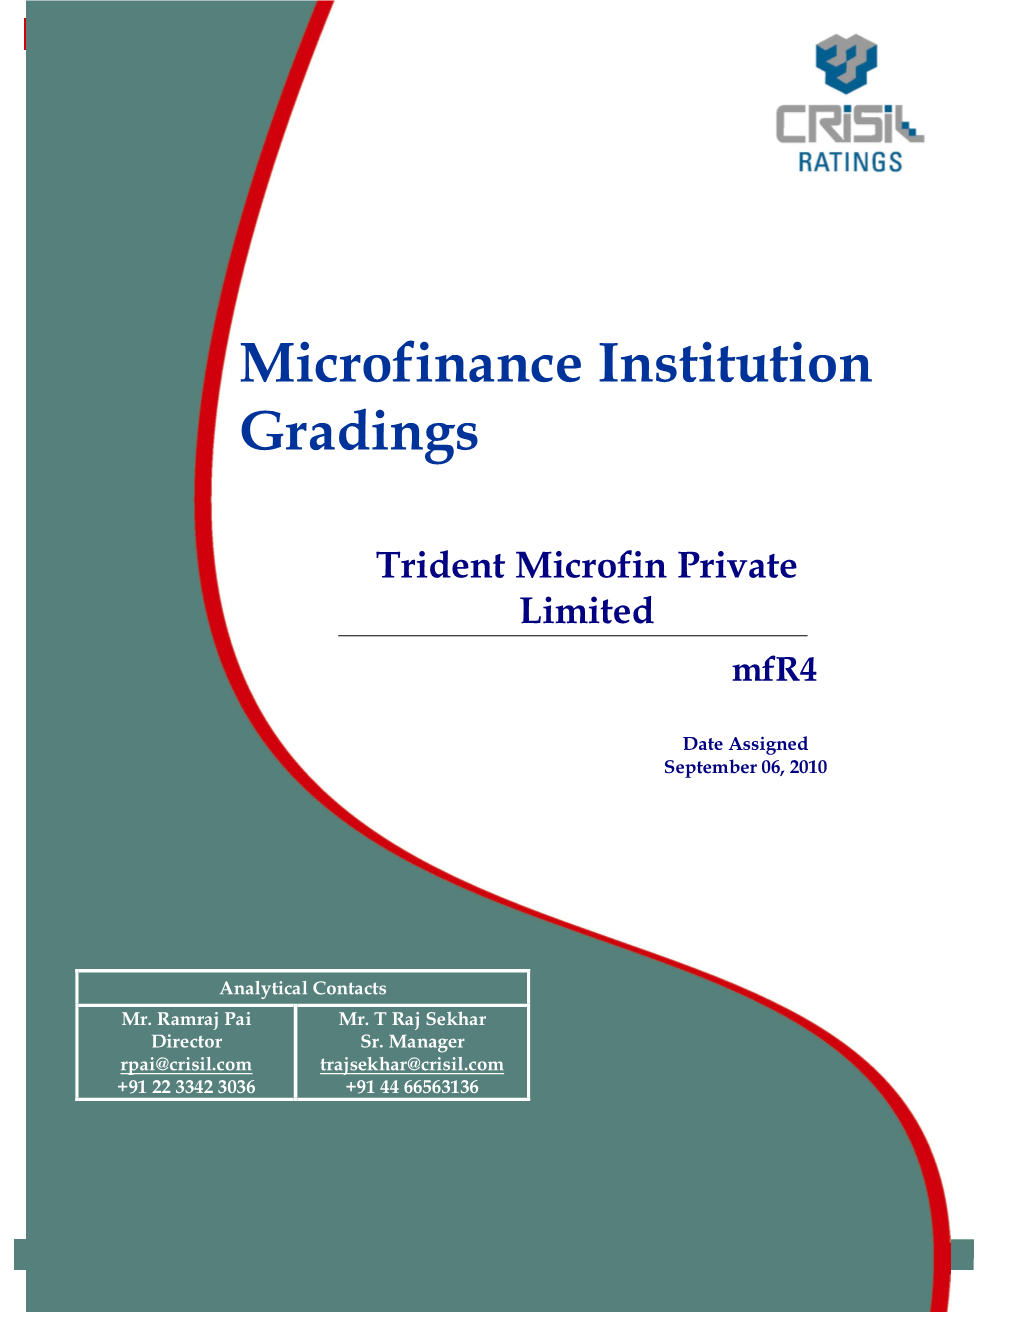 Microfinance Institution Gradings